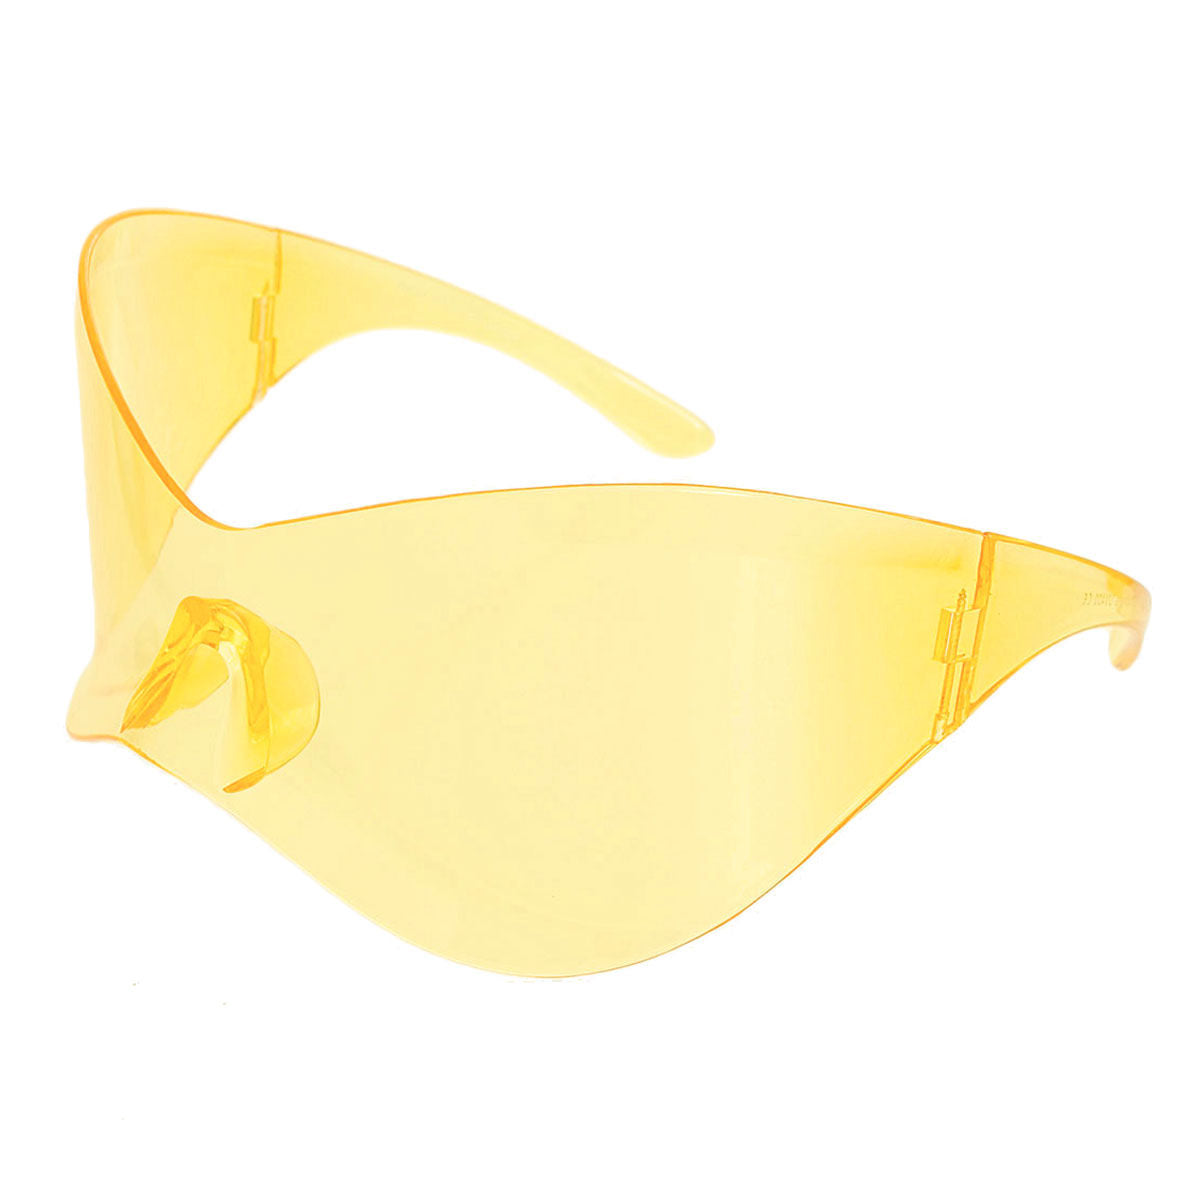 Sunglasses Mask Wrap Yellow Eyewear for Women